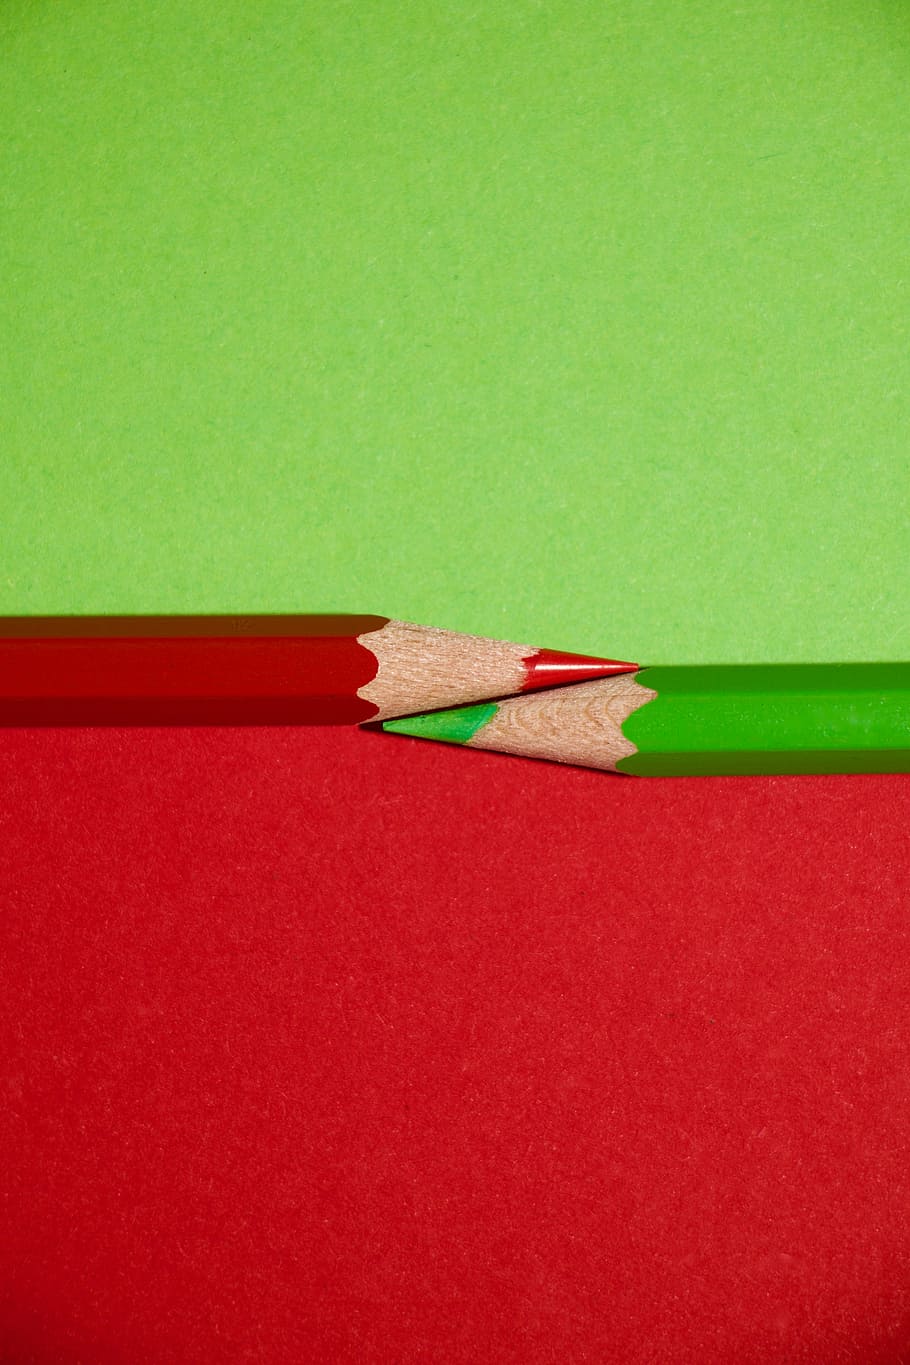 dua, merah, hijau, berwarna, pensil, pensil warna, warna, hebat, di dalam ruangan, benda mati